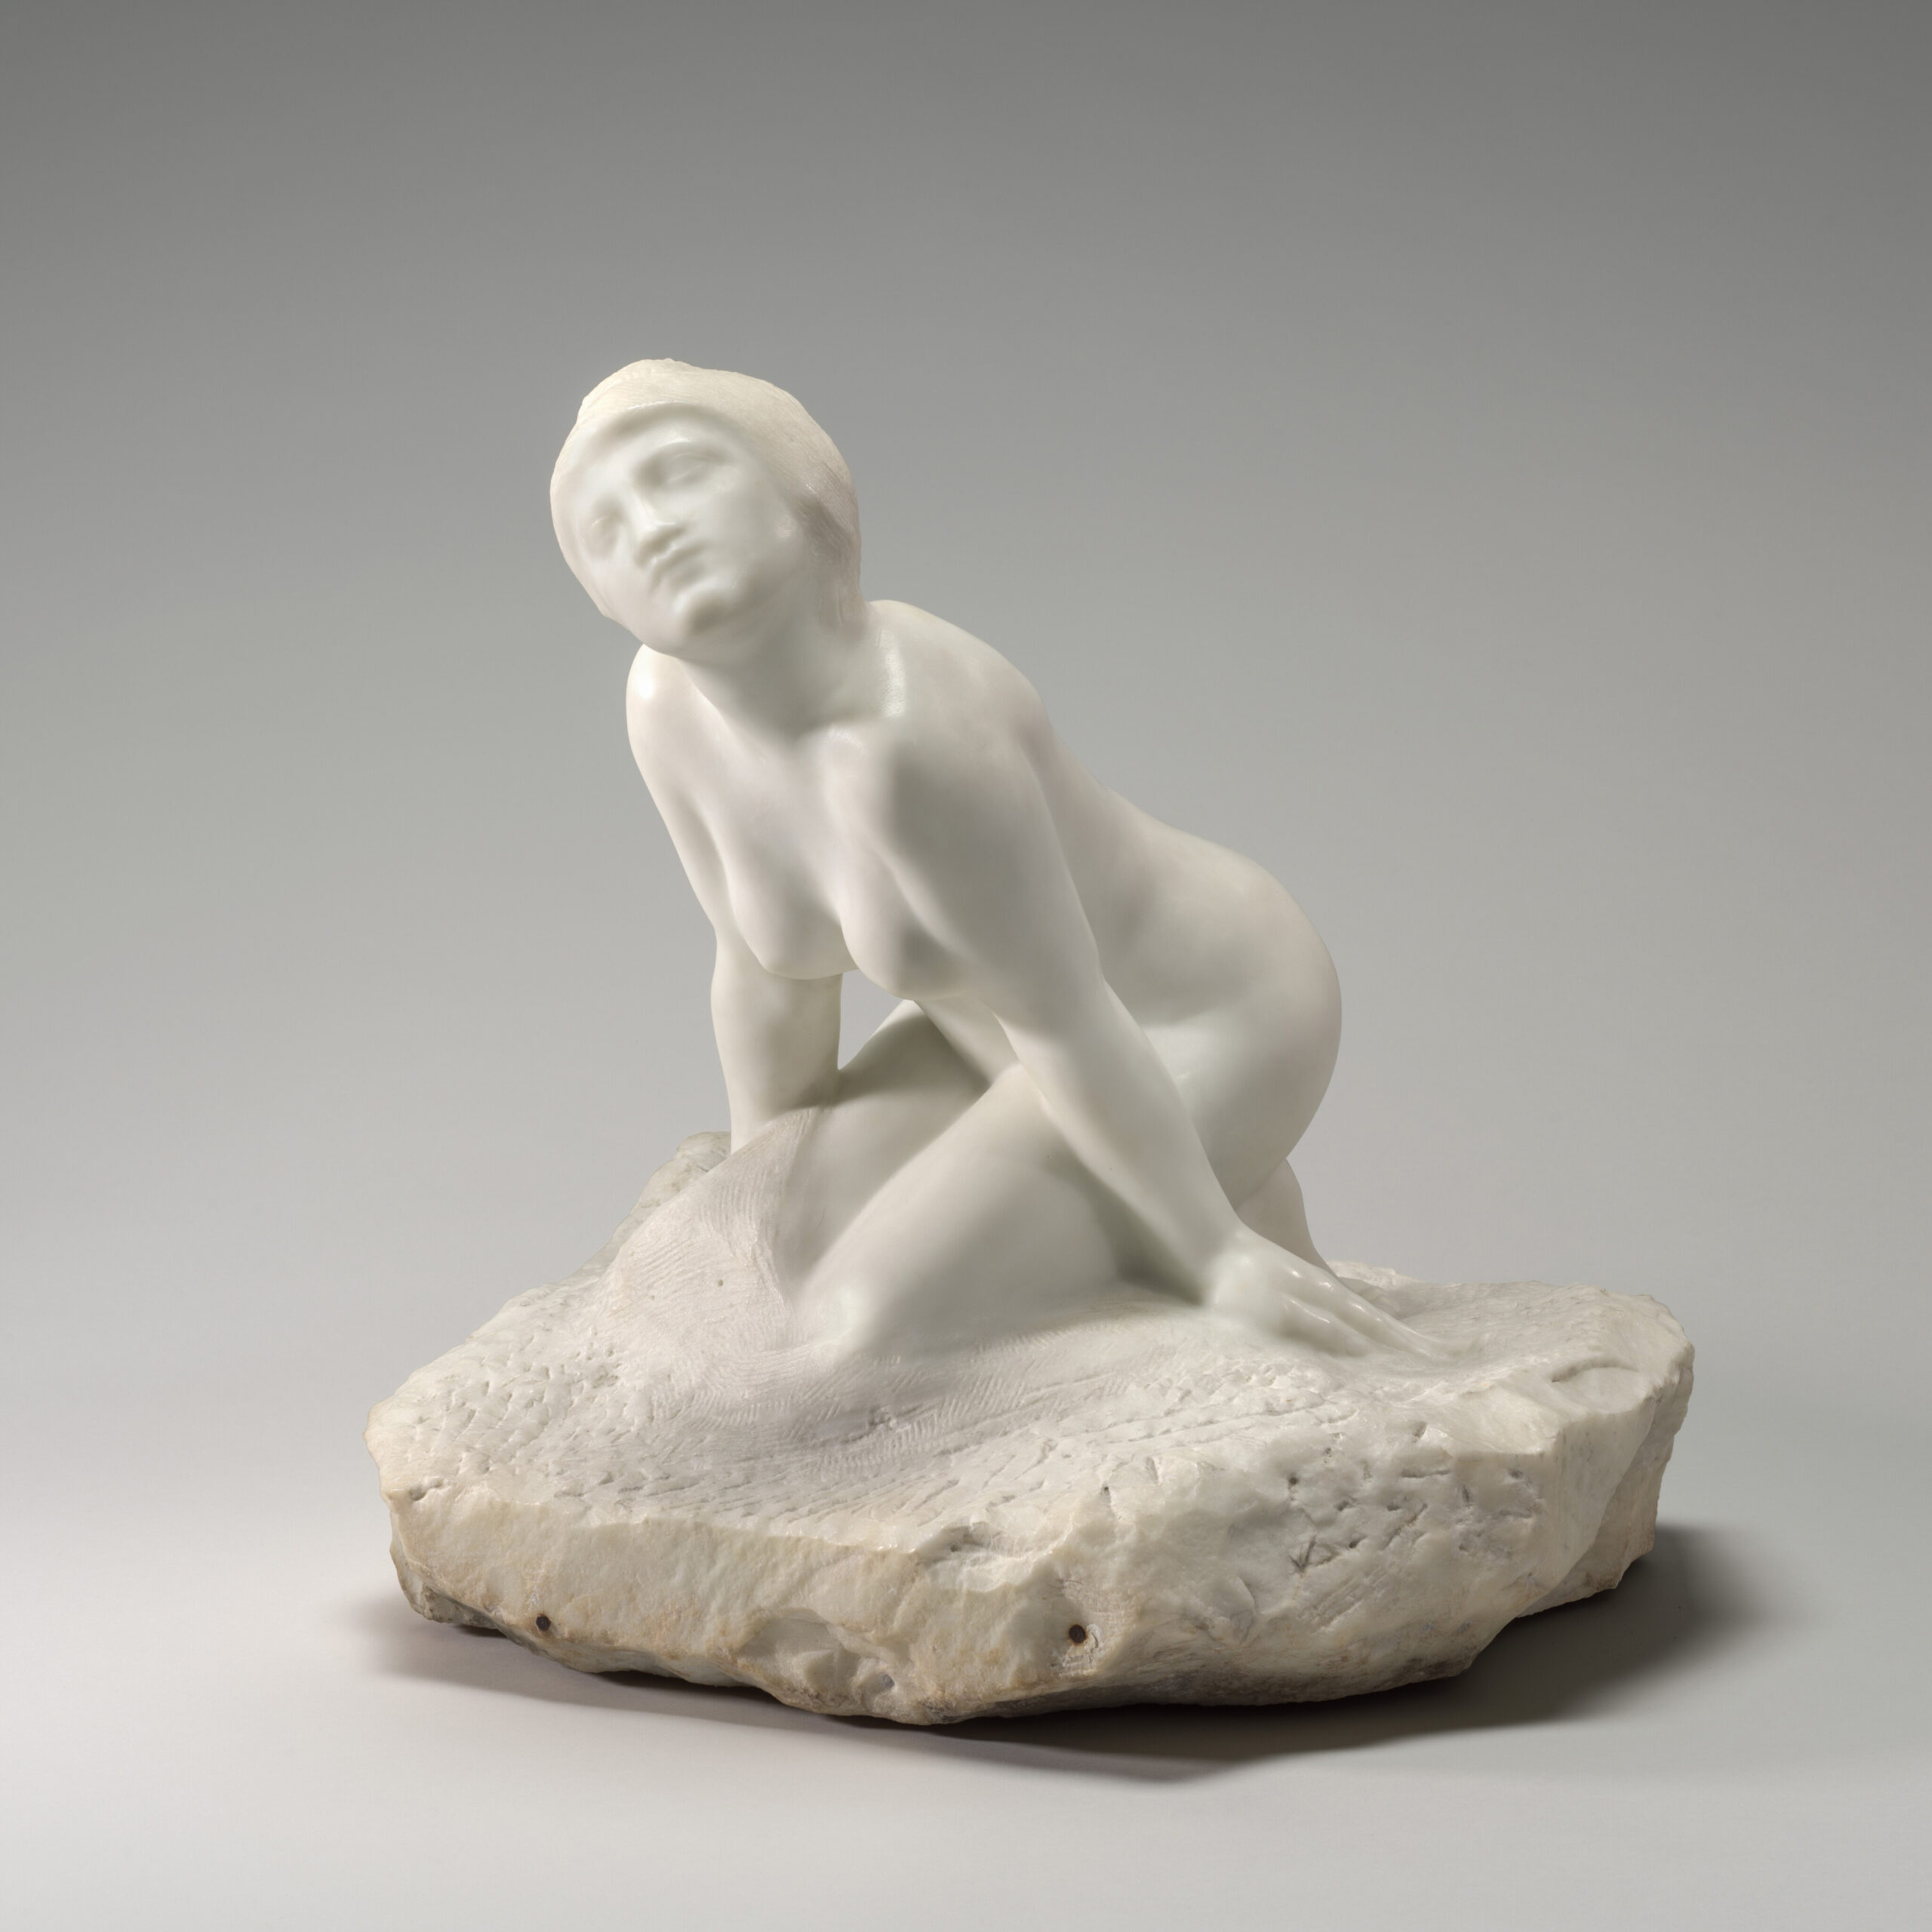 Clark Art Features 'Rodin in America'